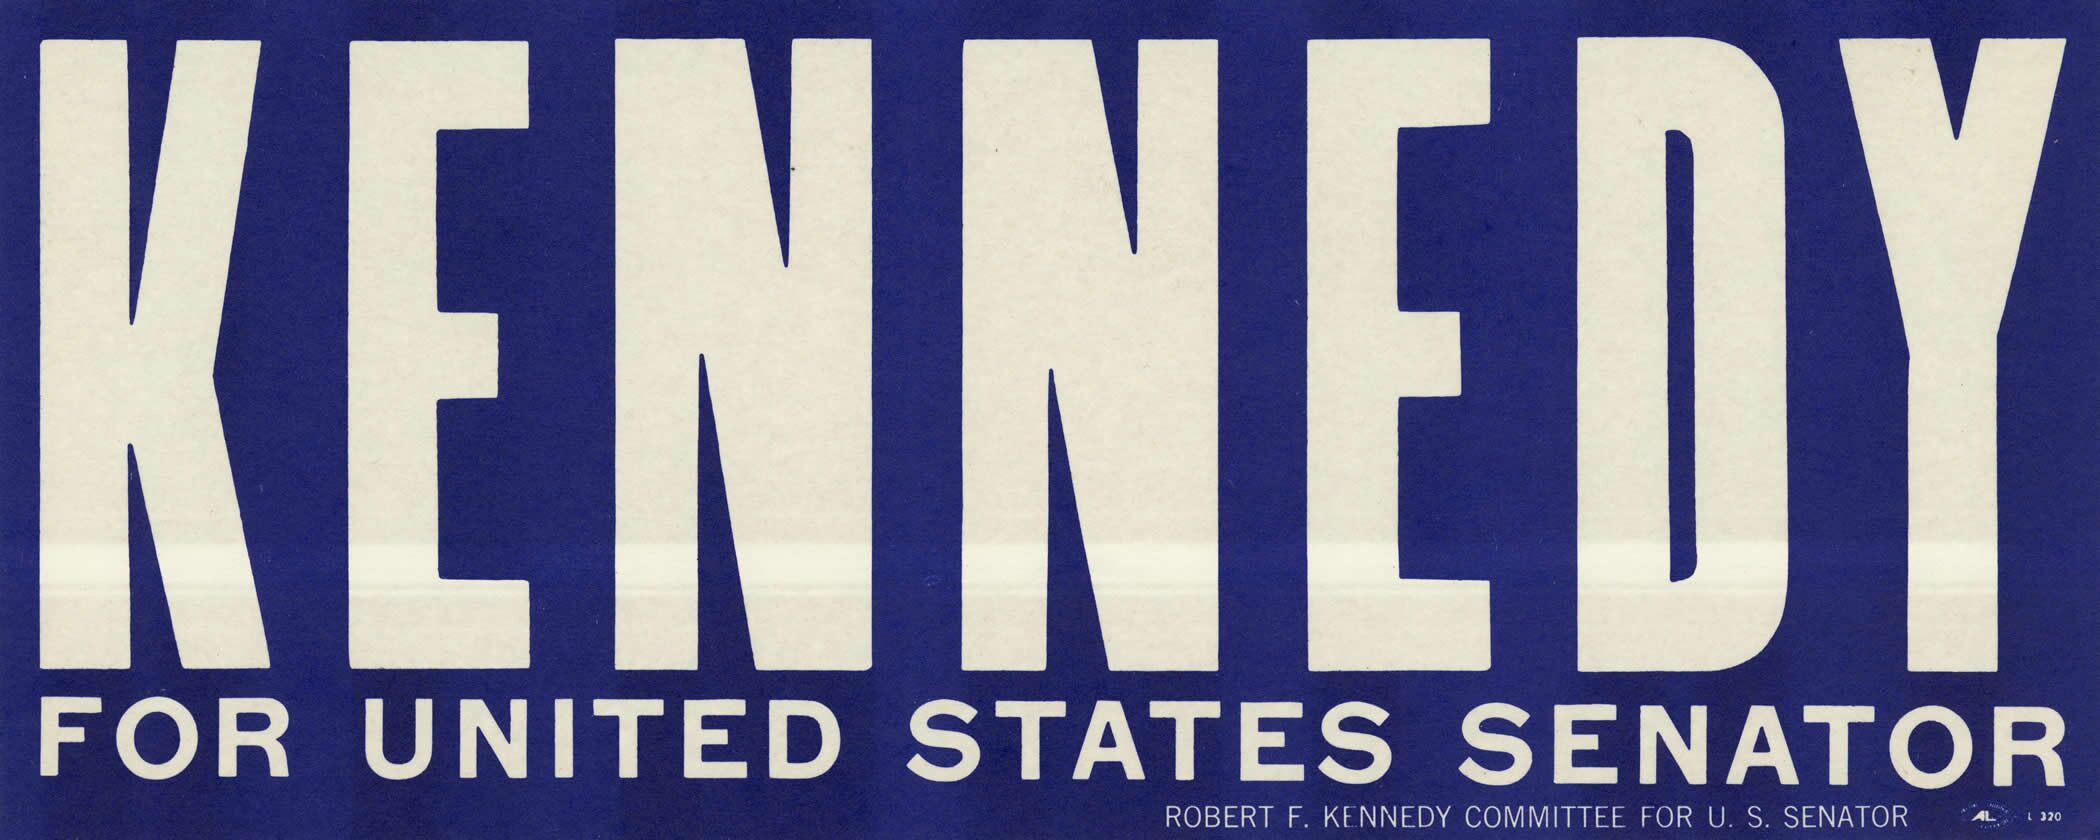 Kennedy for United States Senator bumper sticker, 1964